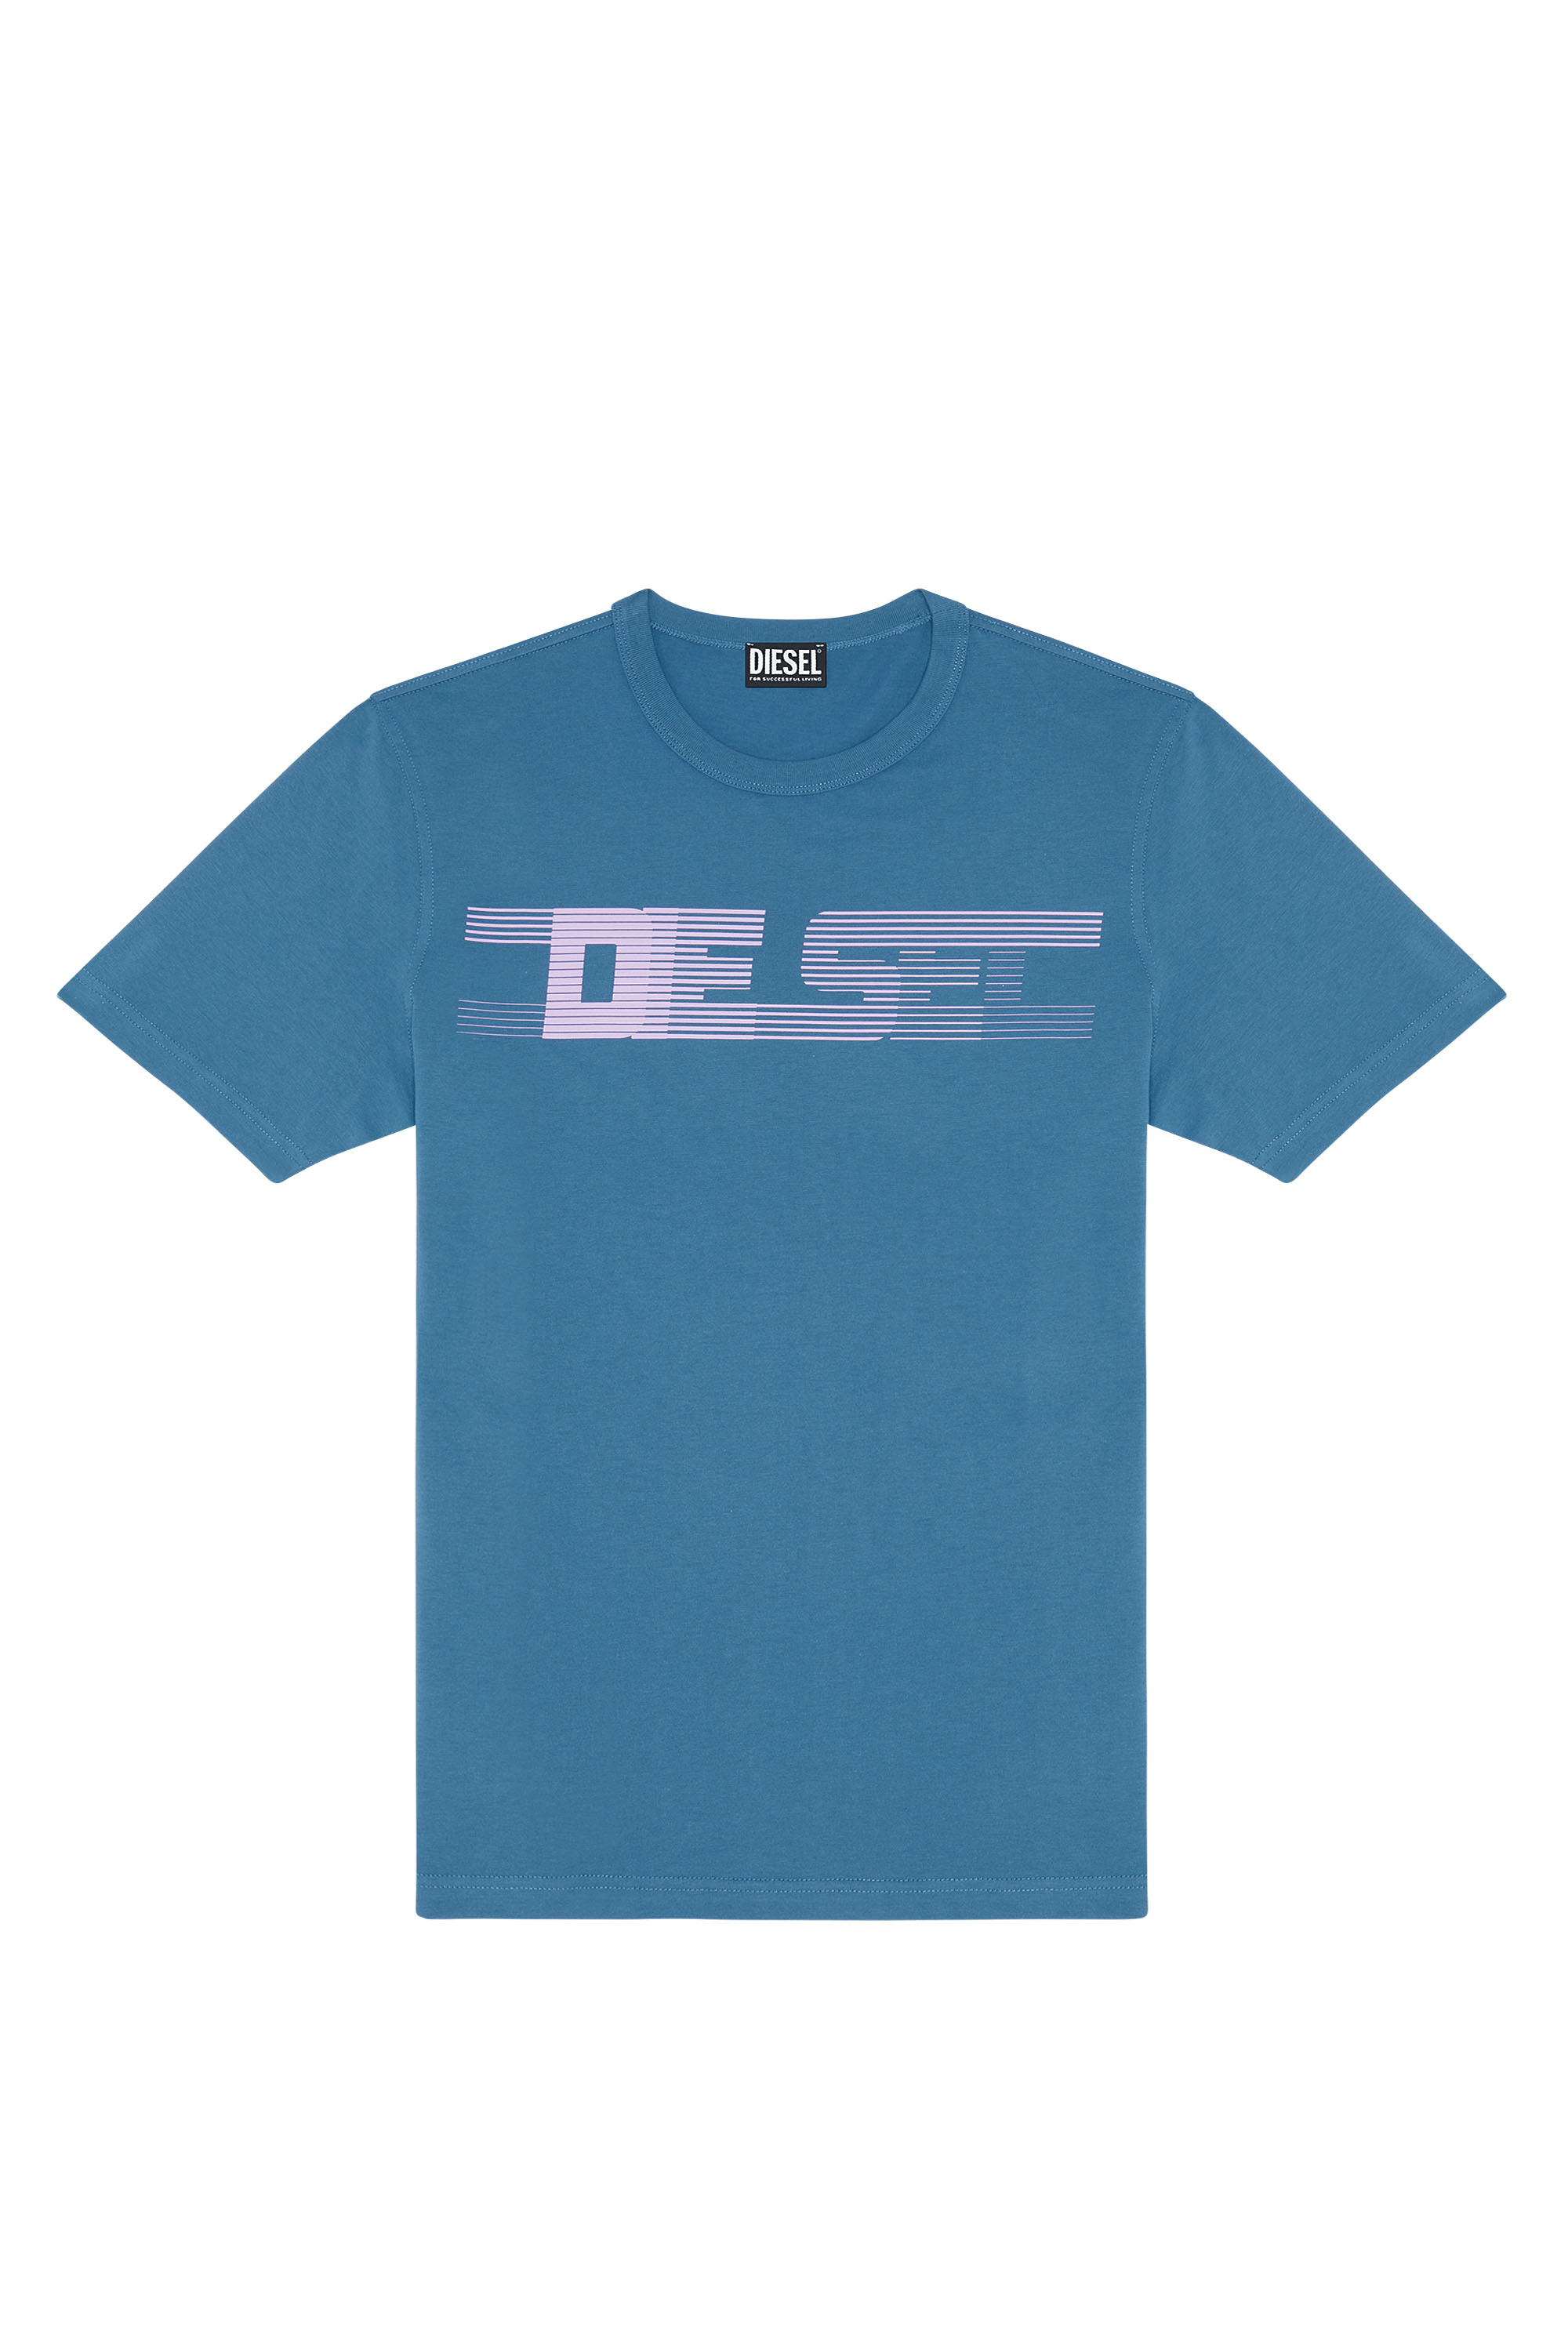 Diesel - T-JUST-E19, Bleu - Image 6